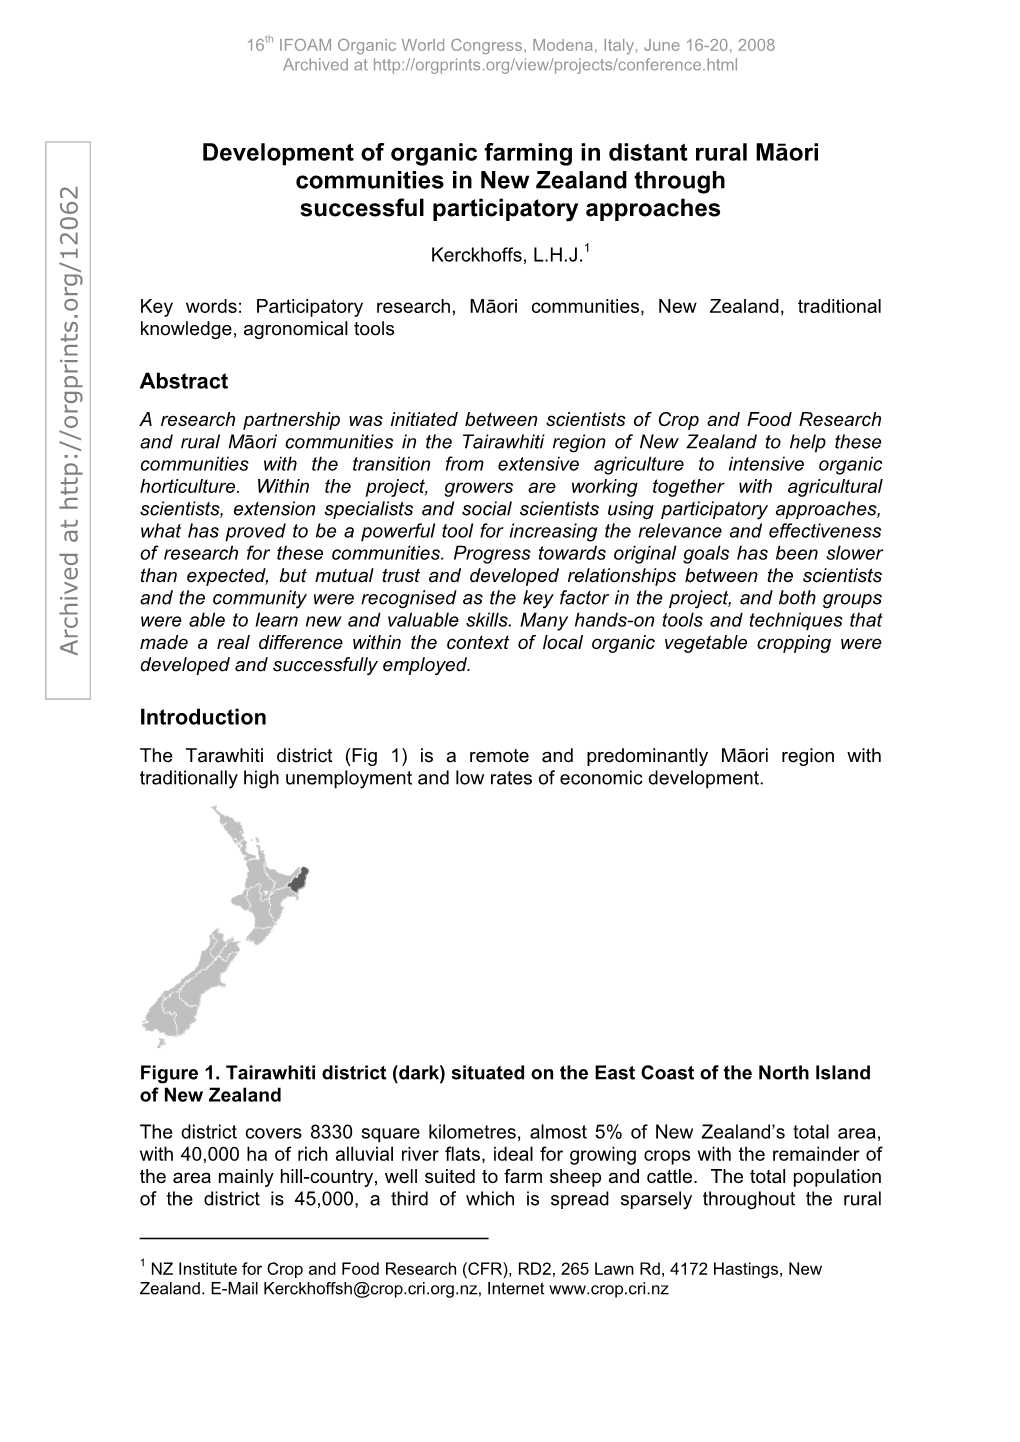 Development of Organic Farming in Distant Rural Māori Communities in New Zealand Through Successful Participatory Approaches